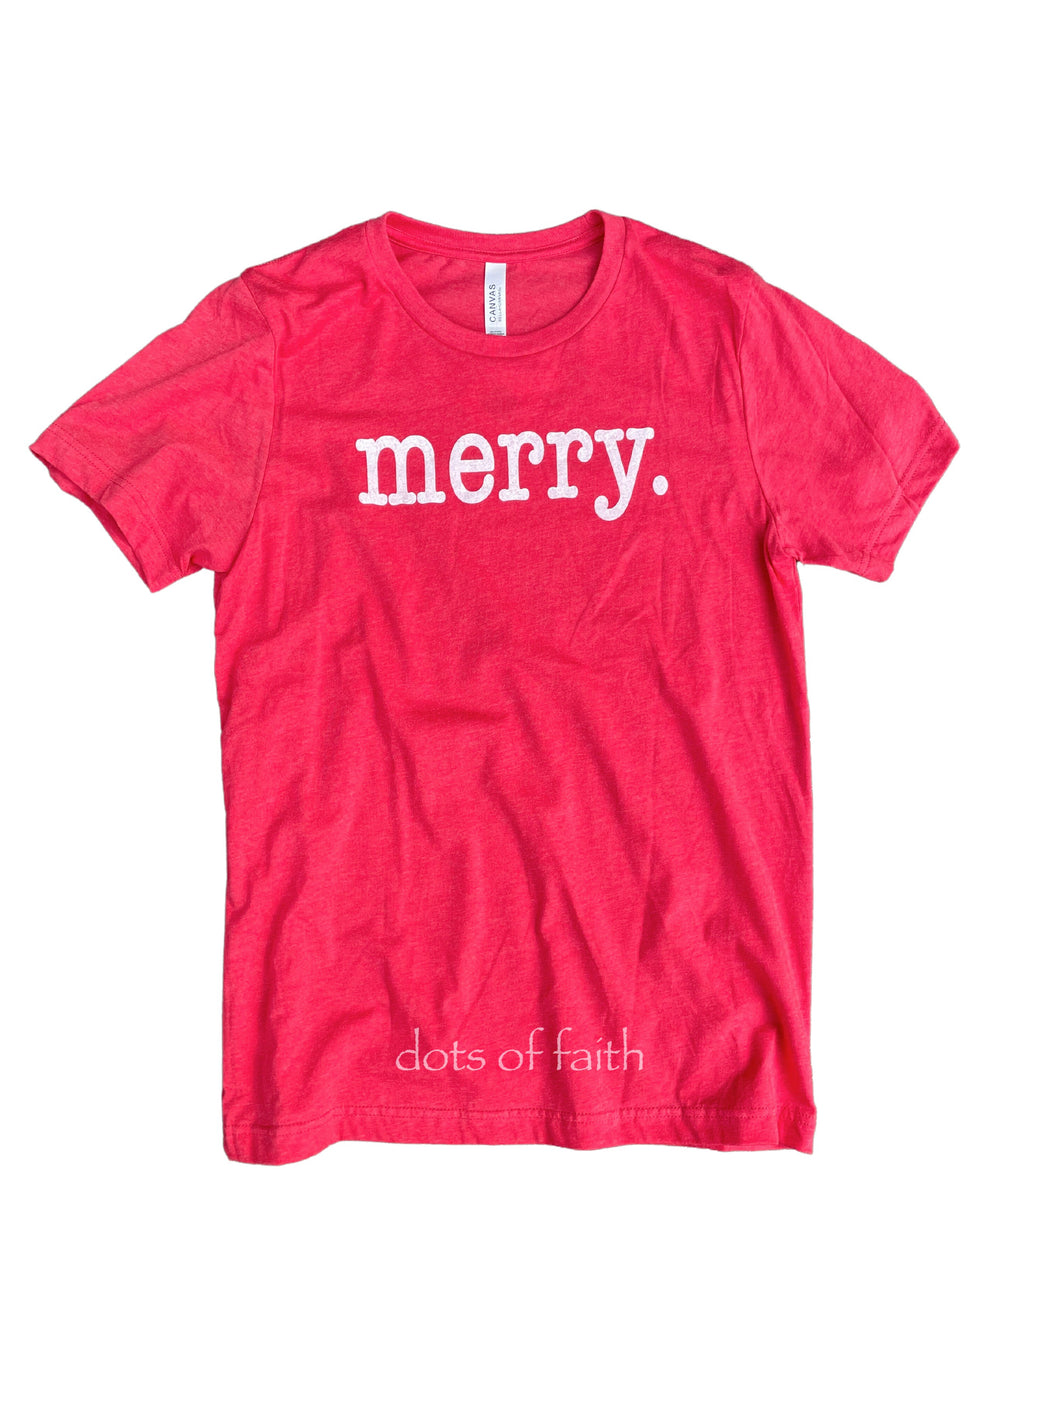 MERRY red Christmas short sleeve shirt